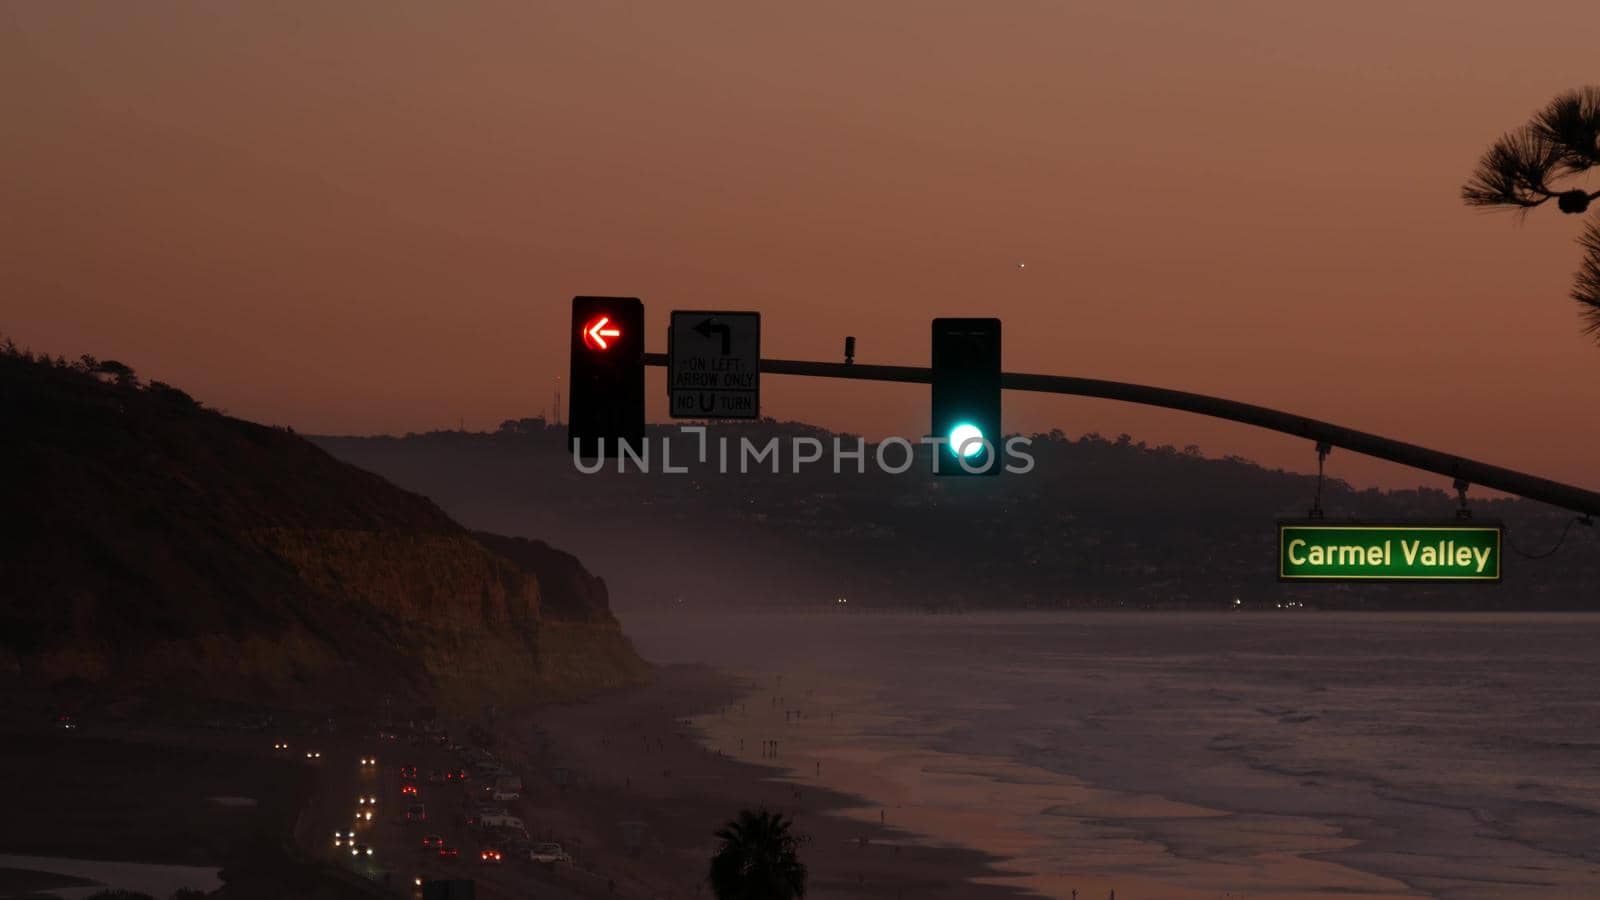 Traffic lights, pacific coast highway, California. Road trip along ocean in dusk by DogoraSun